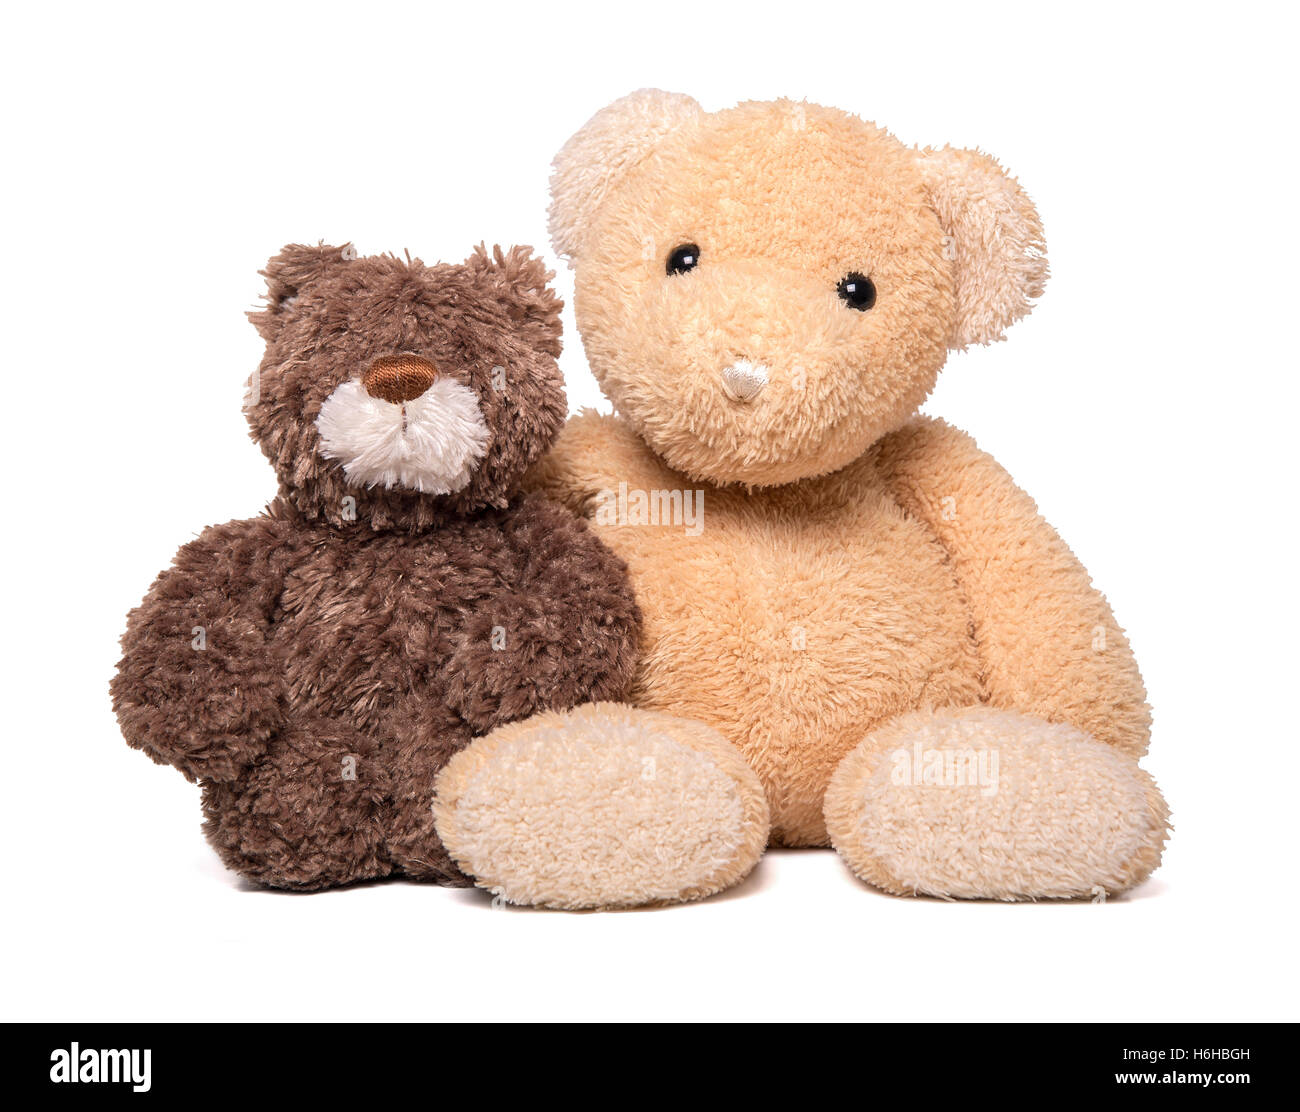 https://c8.alamy.com/comp/H6HBGH/two-teddy-bears-hugging-H6HBGH.jpg